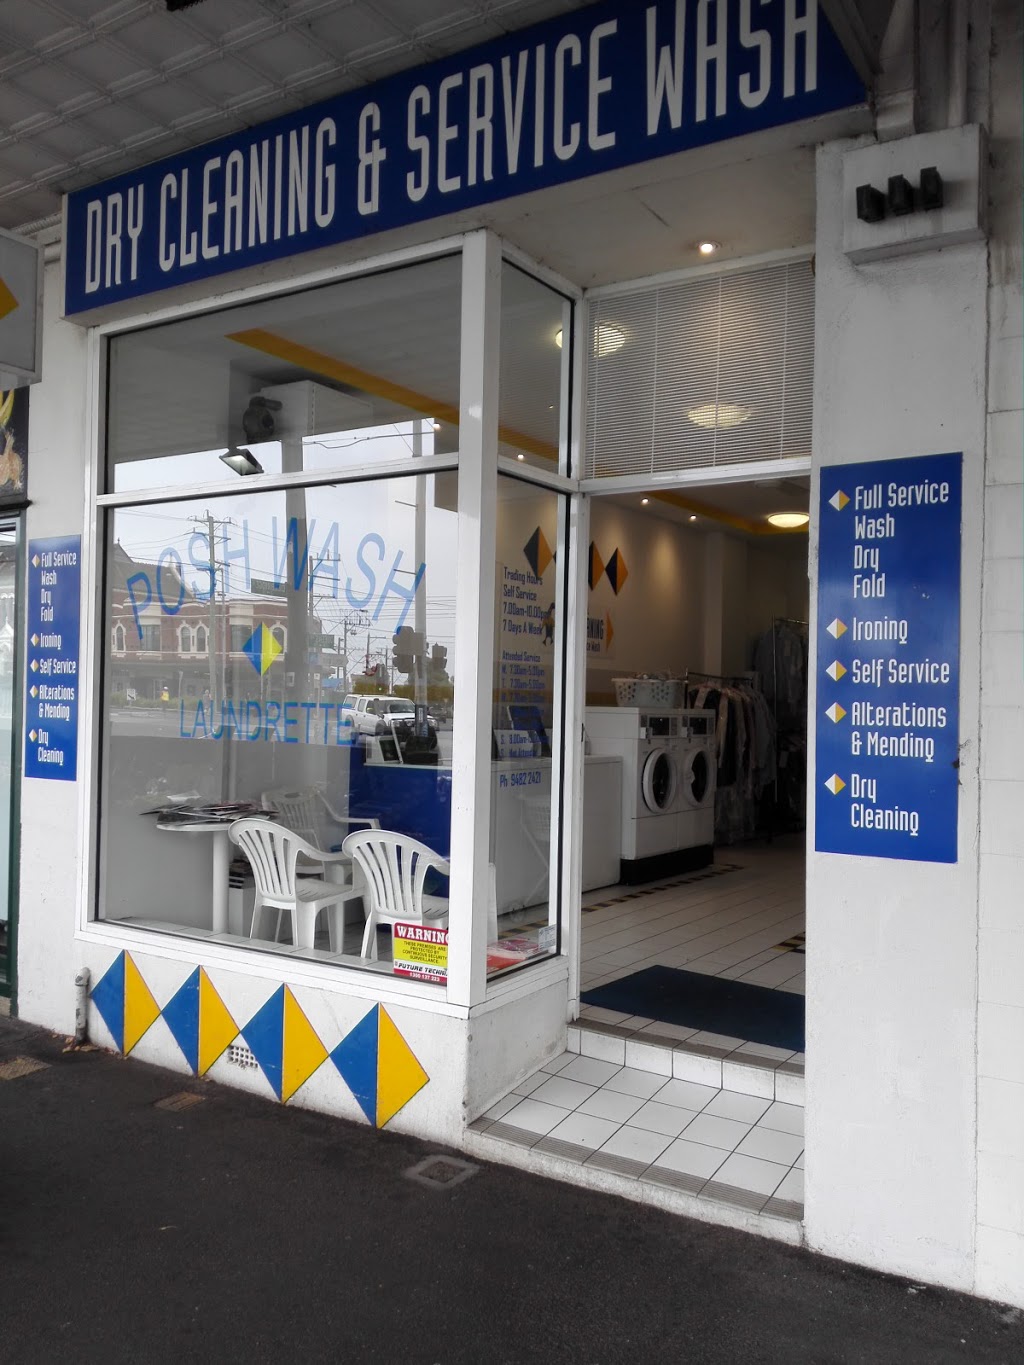 Posh Wash Laundrettes PTY Ltd. | laundry | 276 Queens Parade, Fitzroy North VIC 3068, Australia | 0394822421 OR +61 3 9482 2421